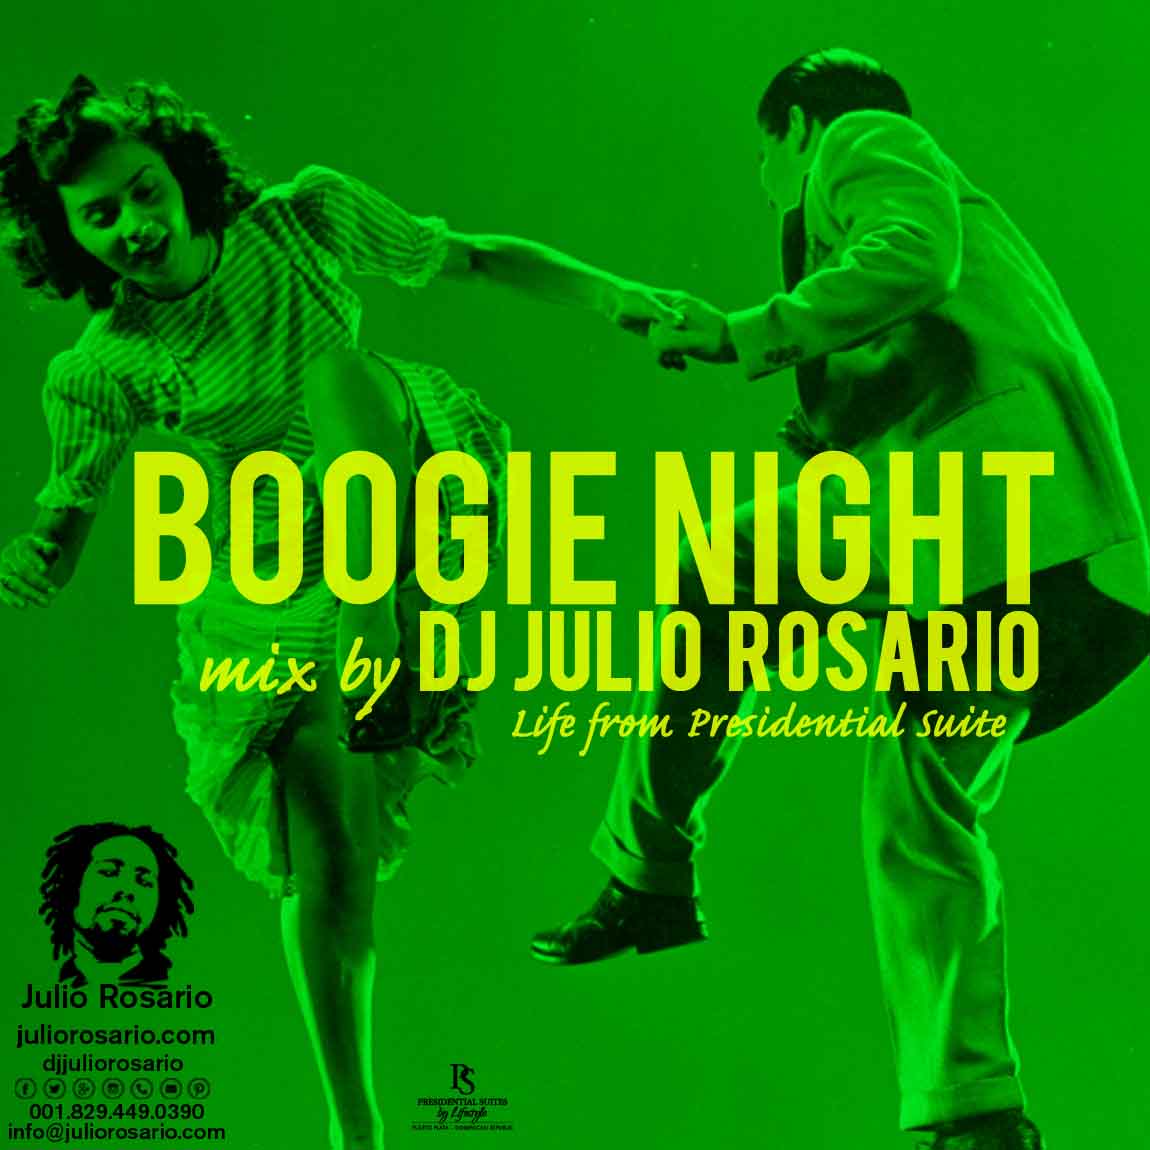 Boogie night